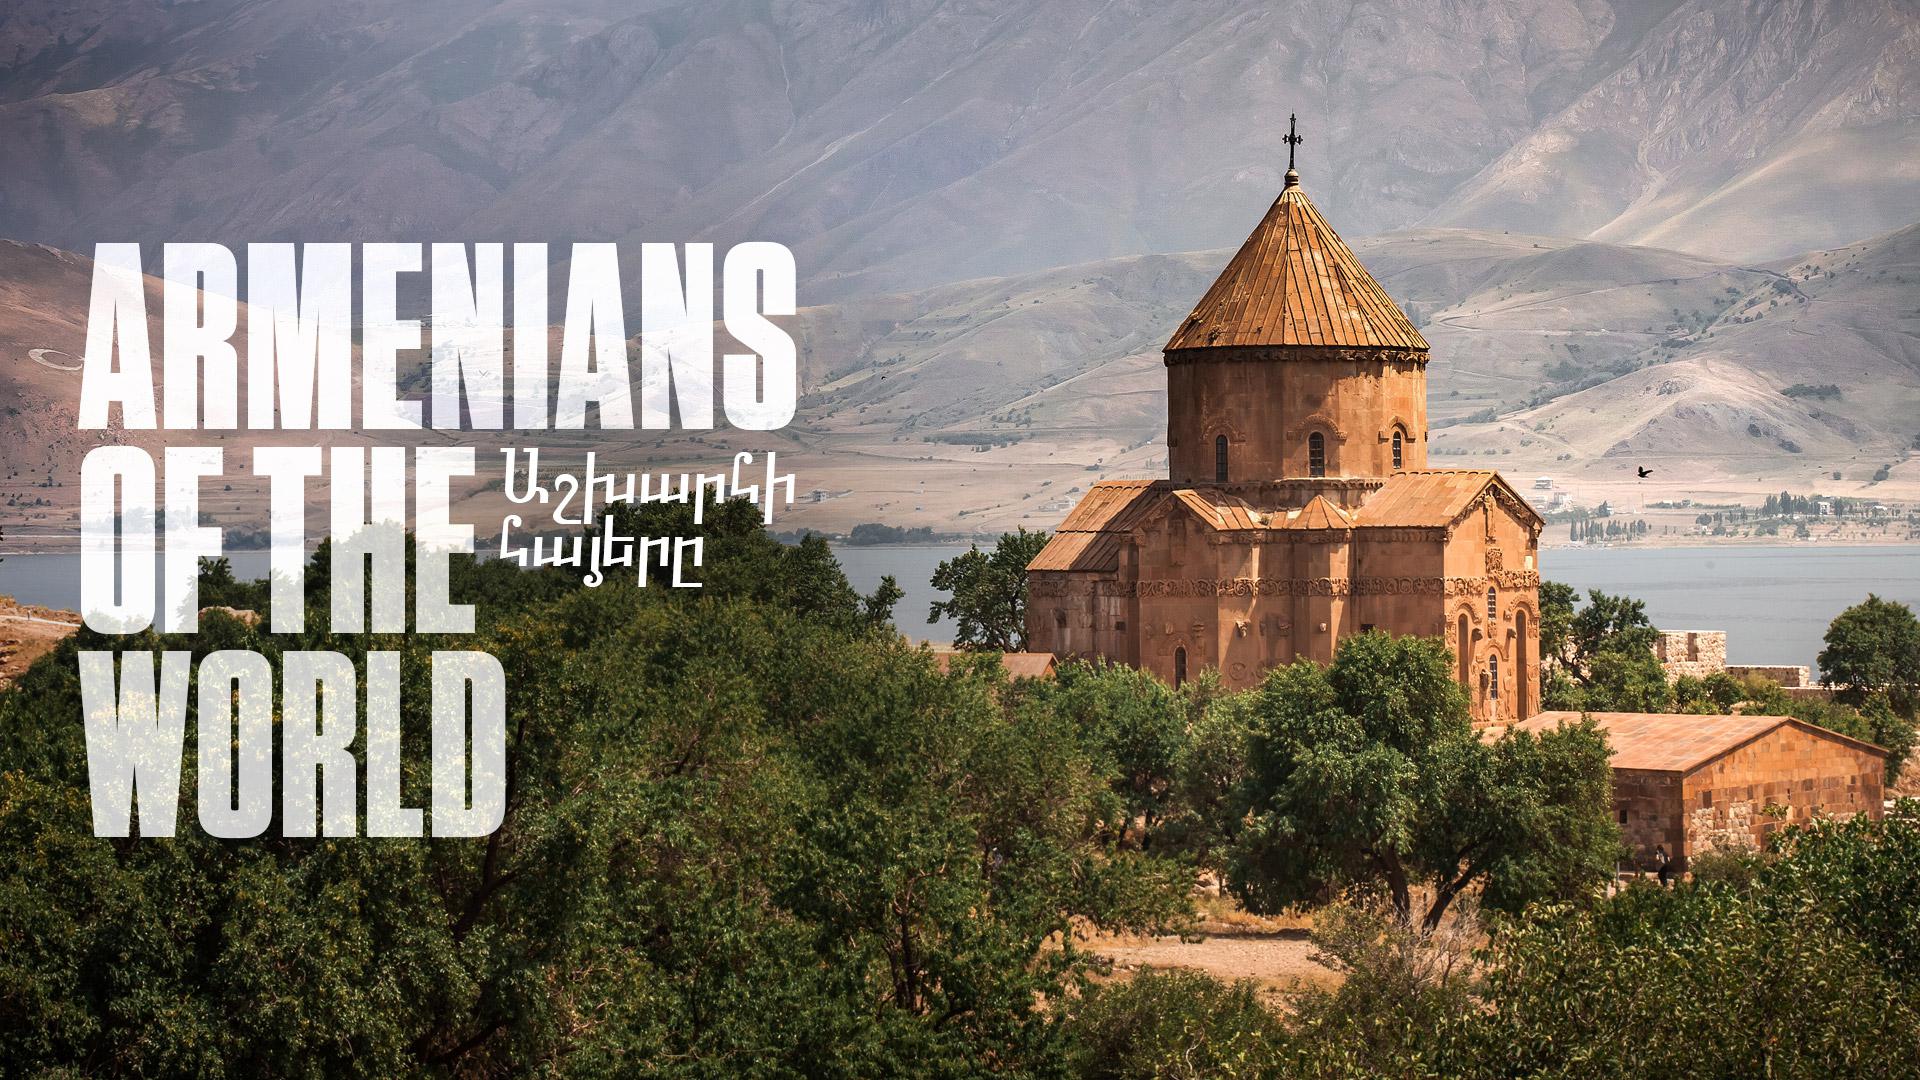 Armenians of the World